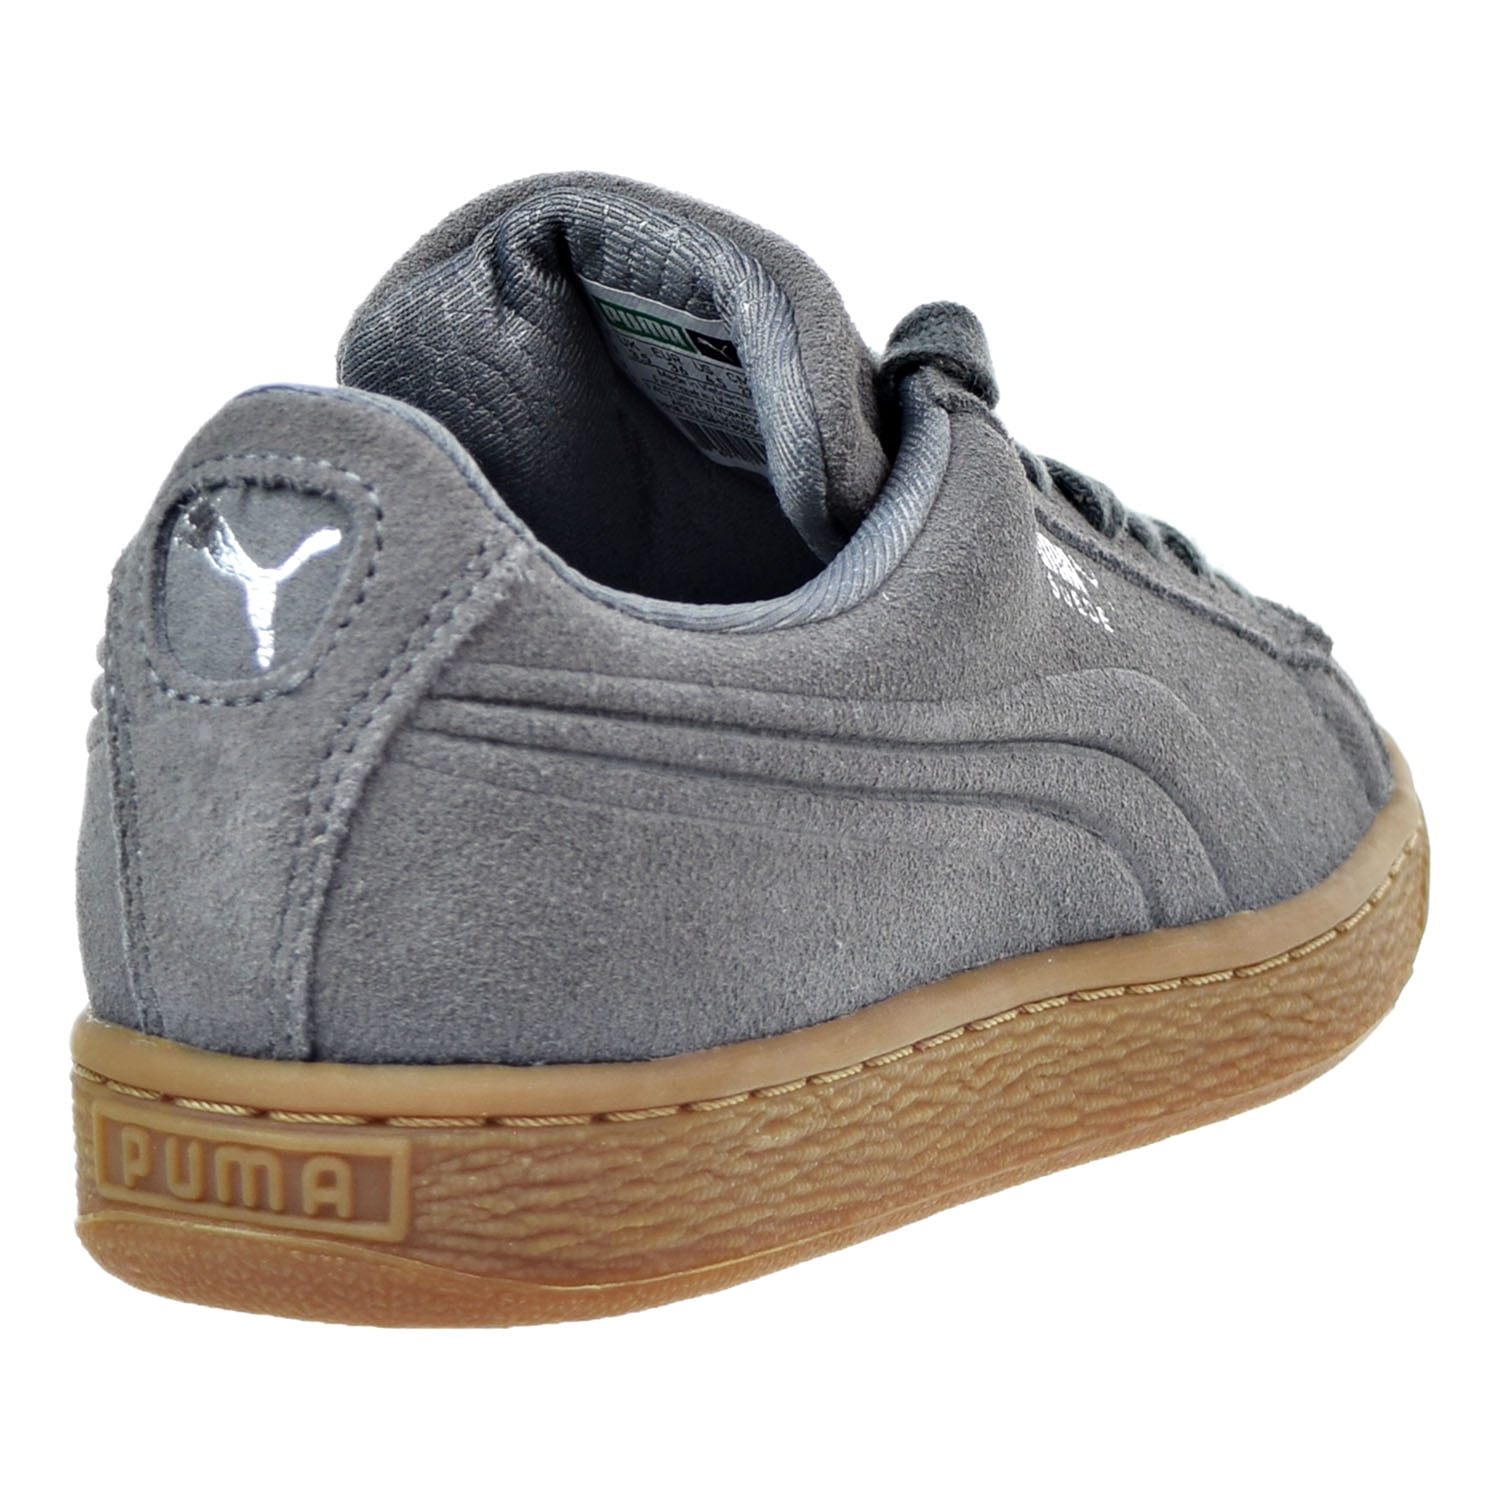 Puma Suede Classic Debossed Men's Sneakers Steel Gray-Peacoat361098-01 